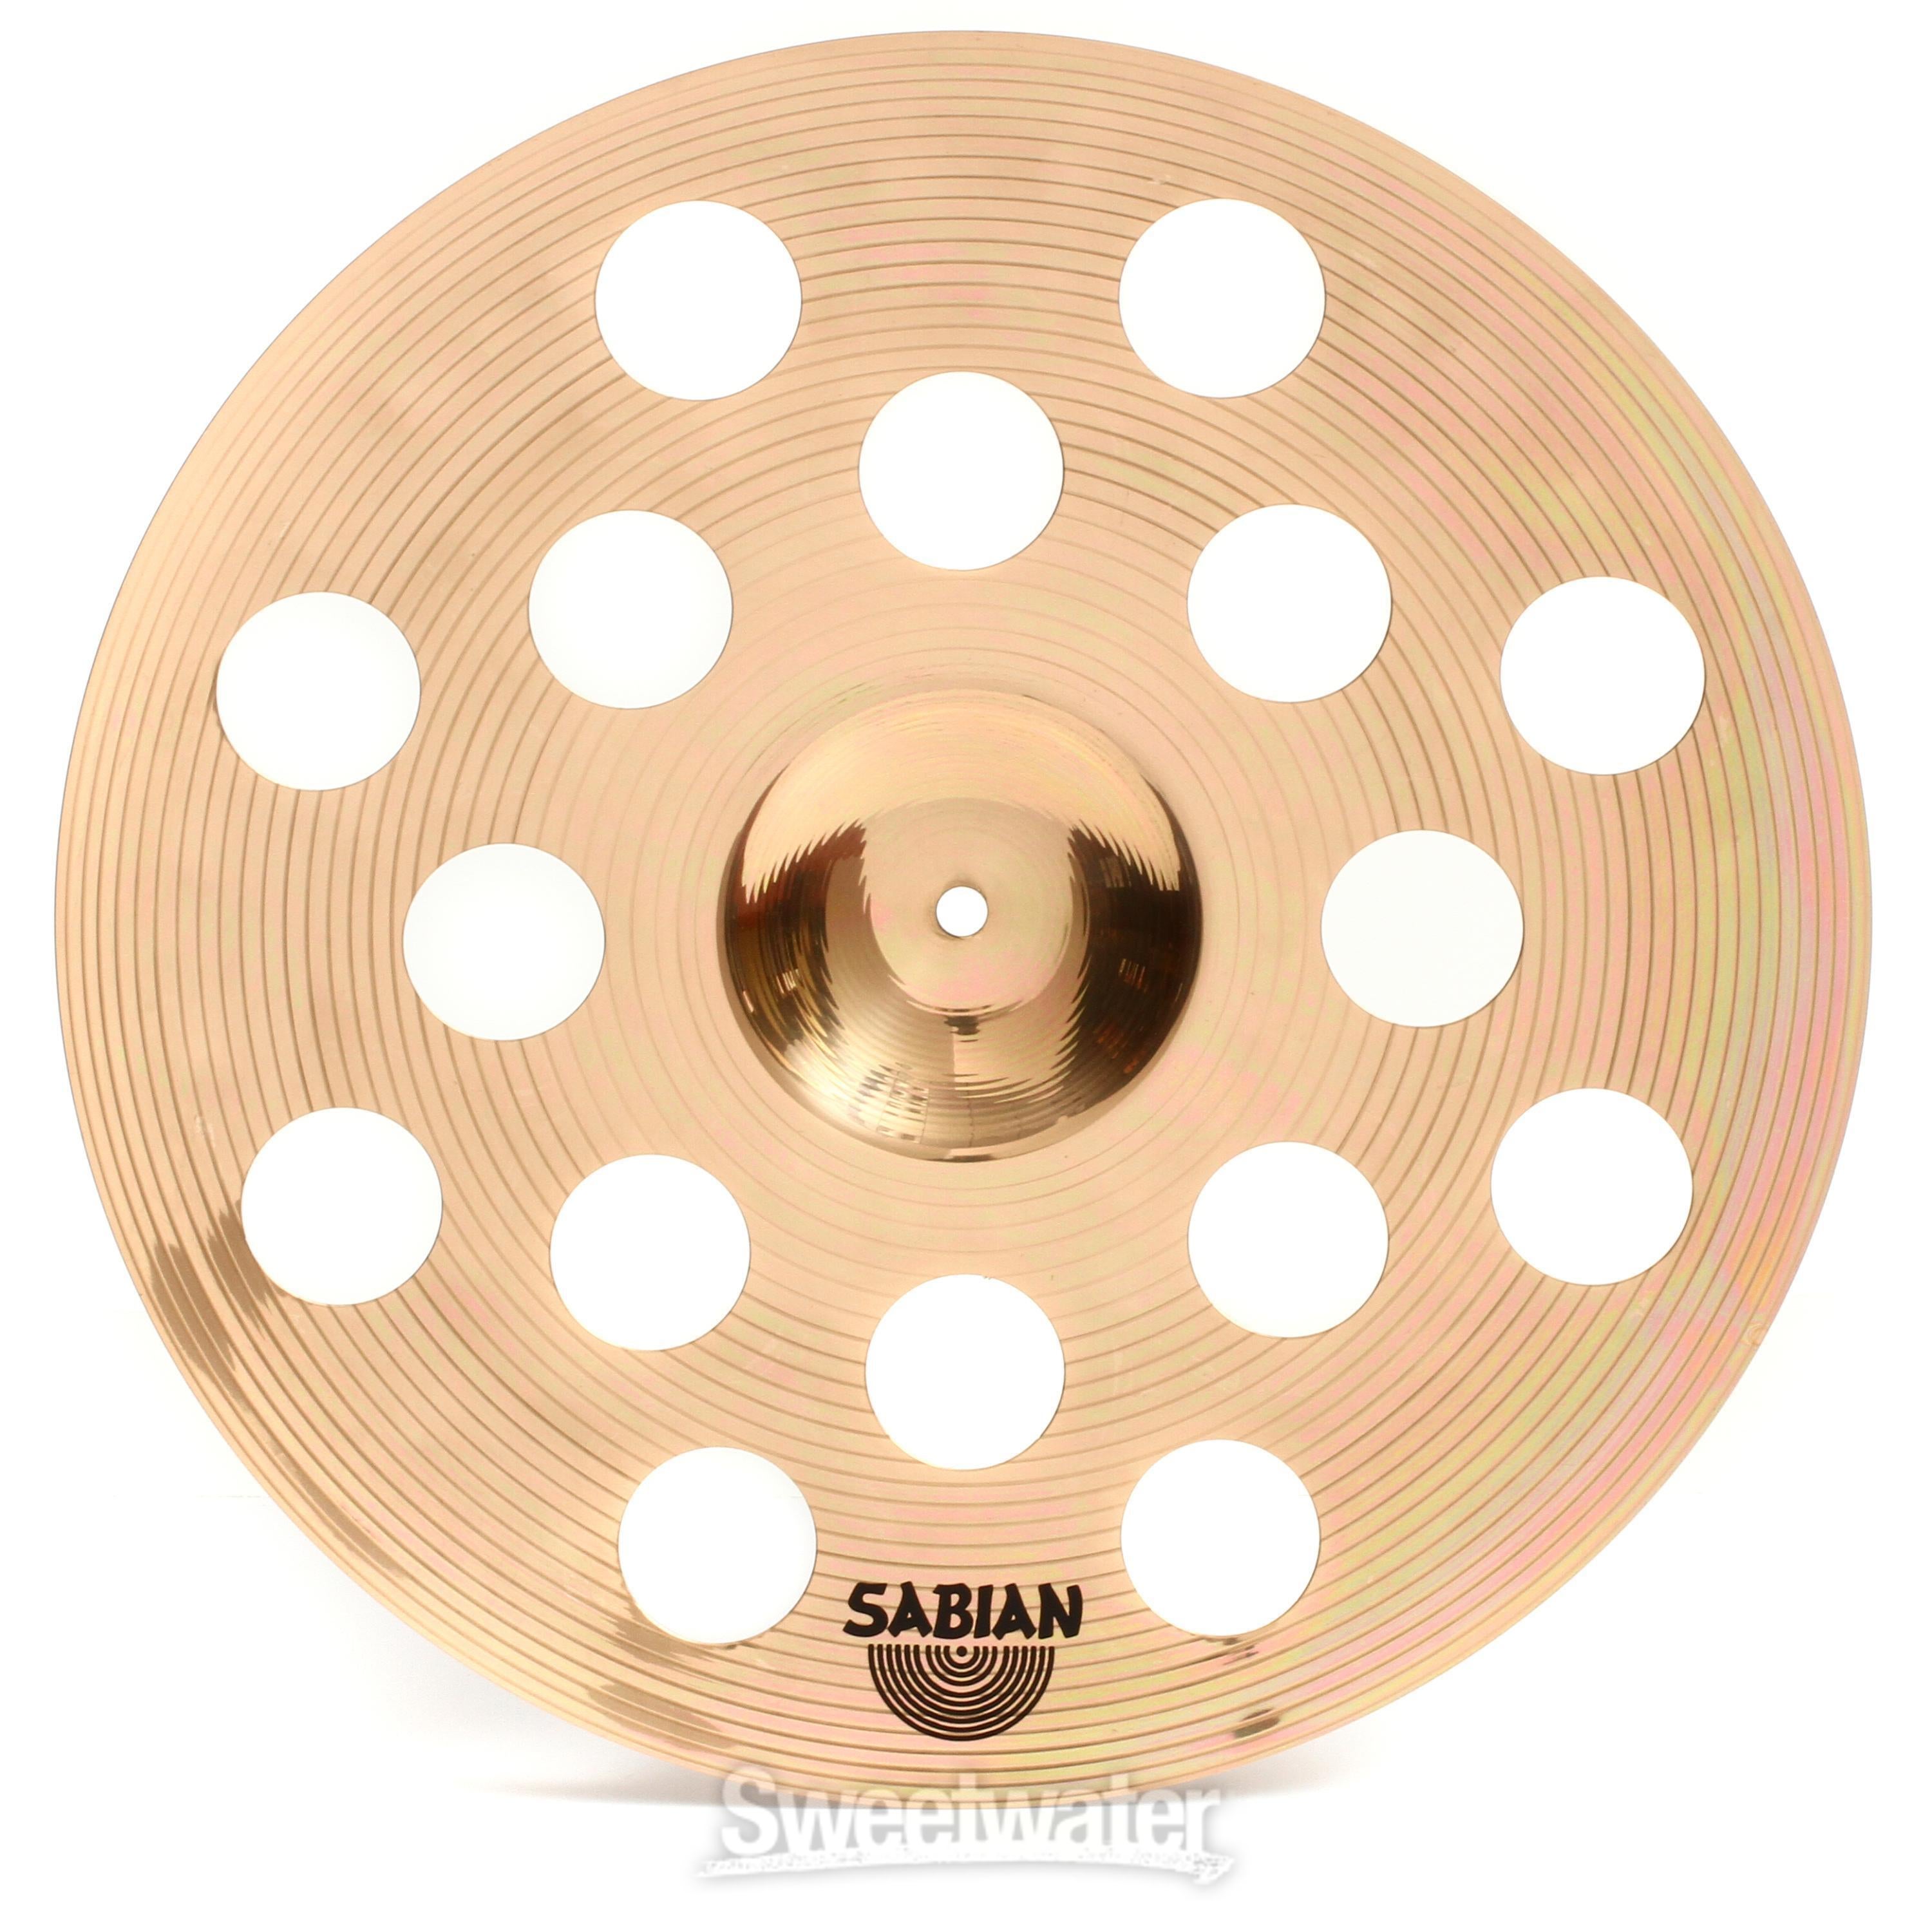 Sabian B8X Pro O-Zone Crash Cymbal - 18